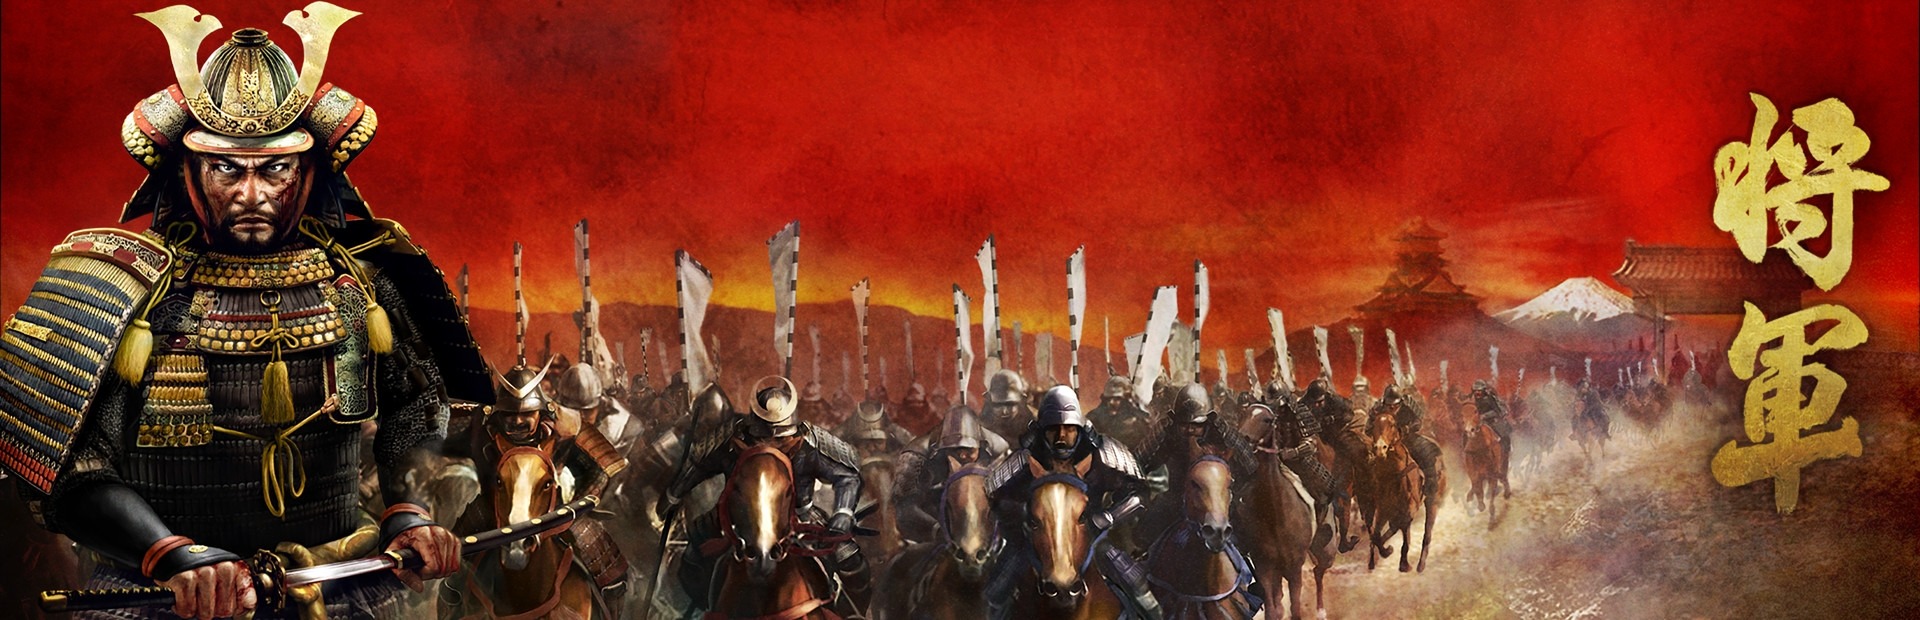 Banner Total War: SHOGUN 2 - Rise of the Samurai Campaign